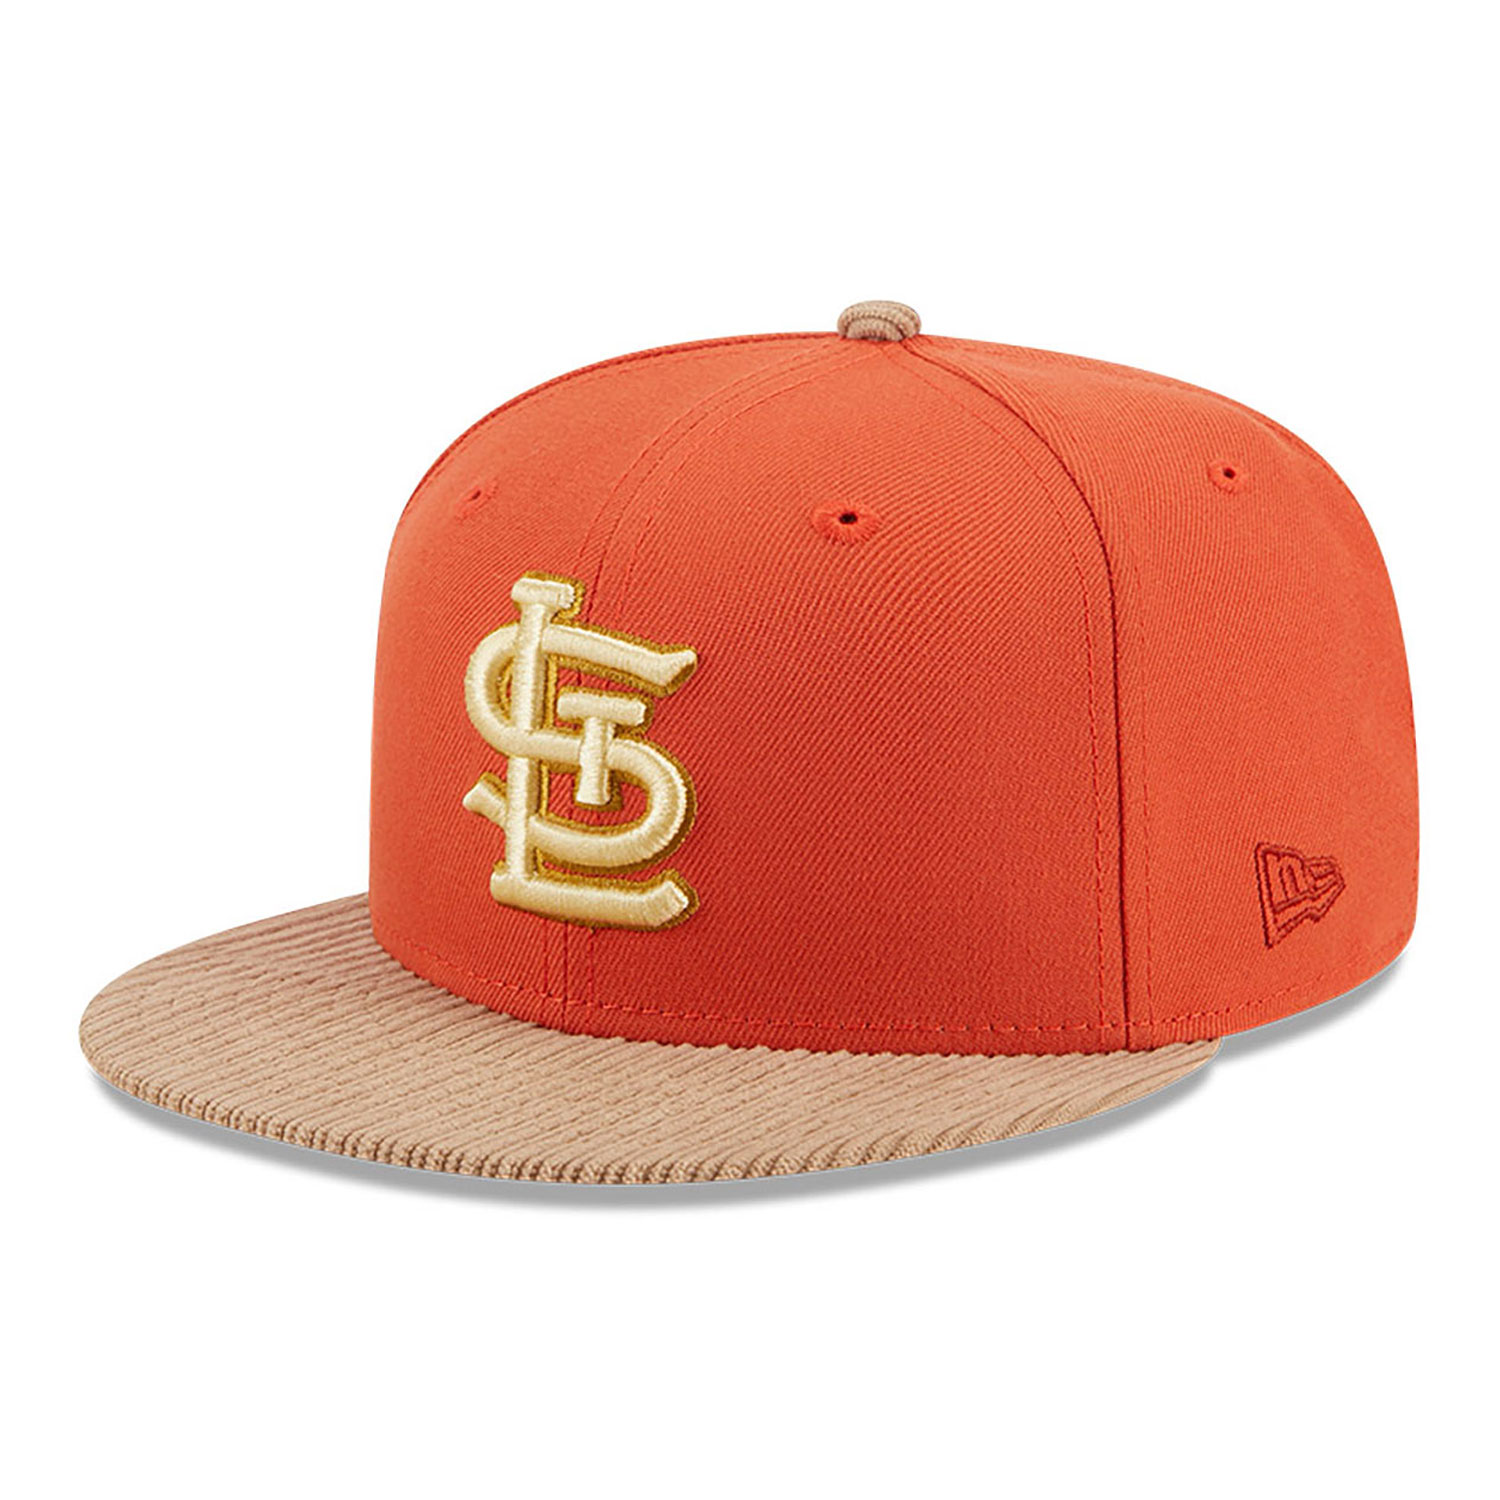 St. Louis Cardinals MLB Autumn Wheat Dark Orange 9FIFTY Snapback Cap